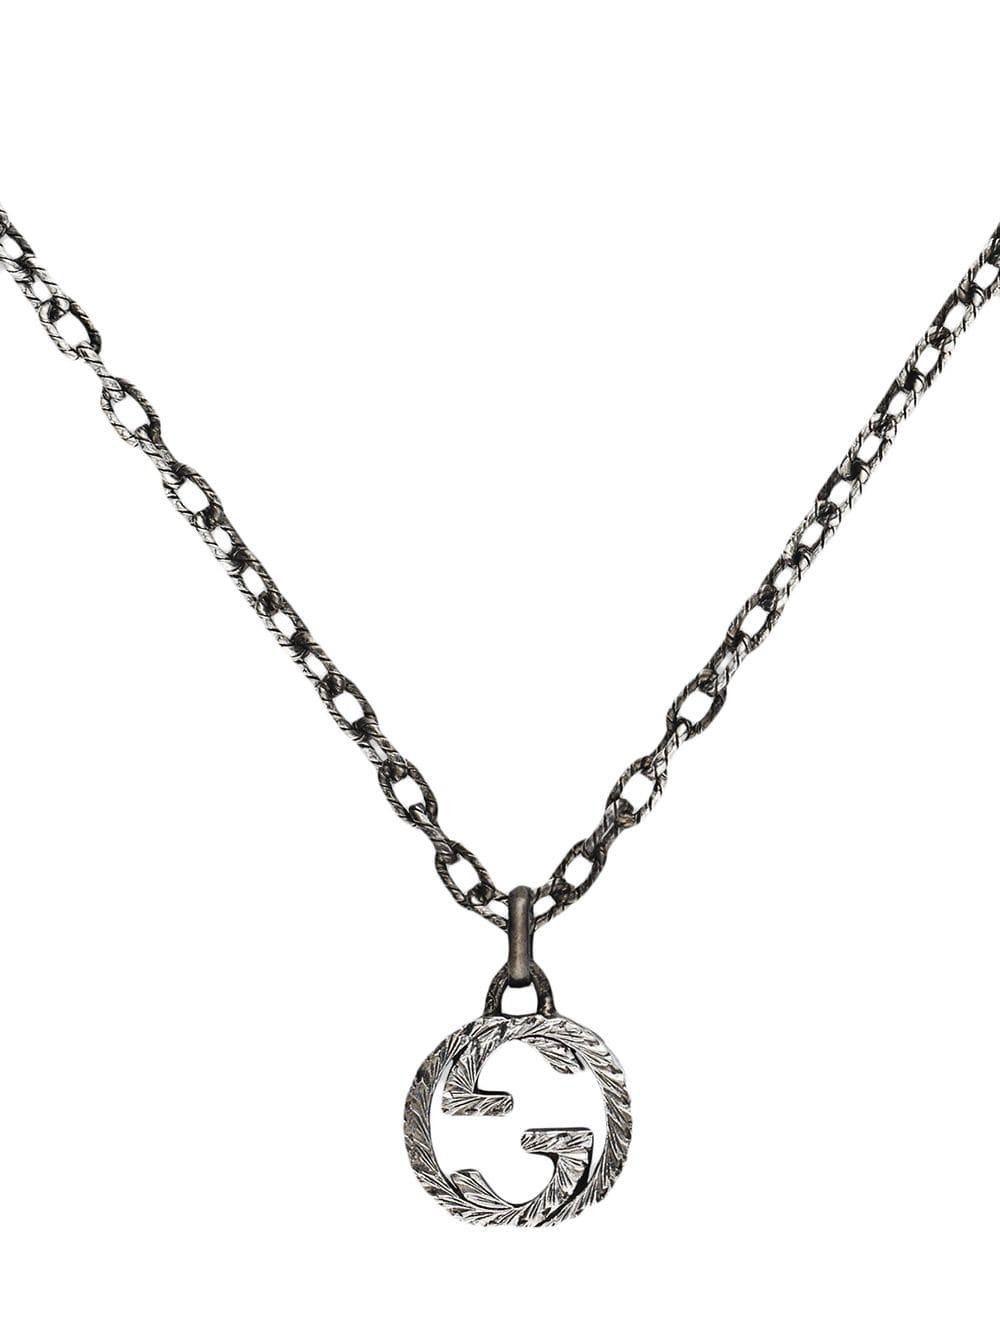 Gucci Interlocking G Pendant Necklace in Metallic for Men - Lyst